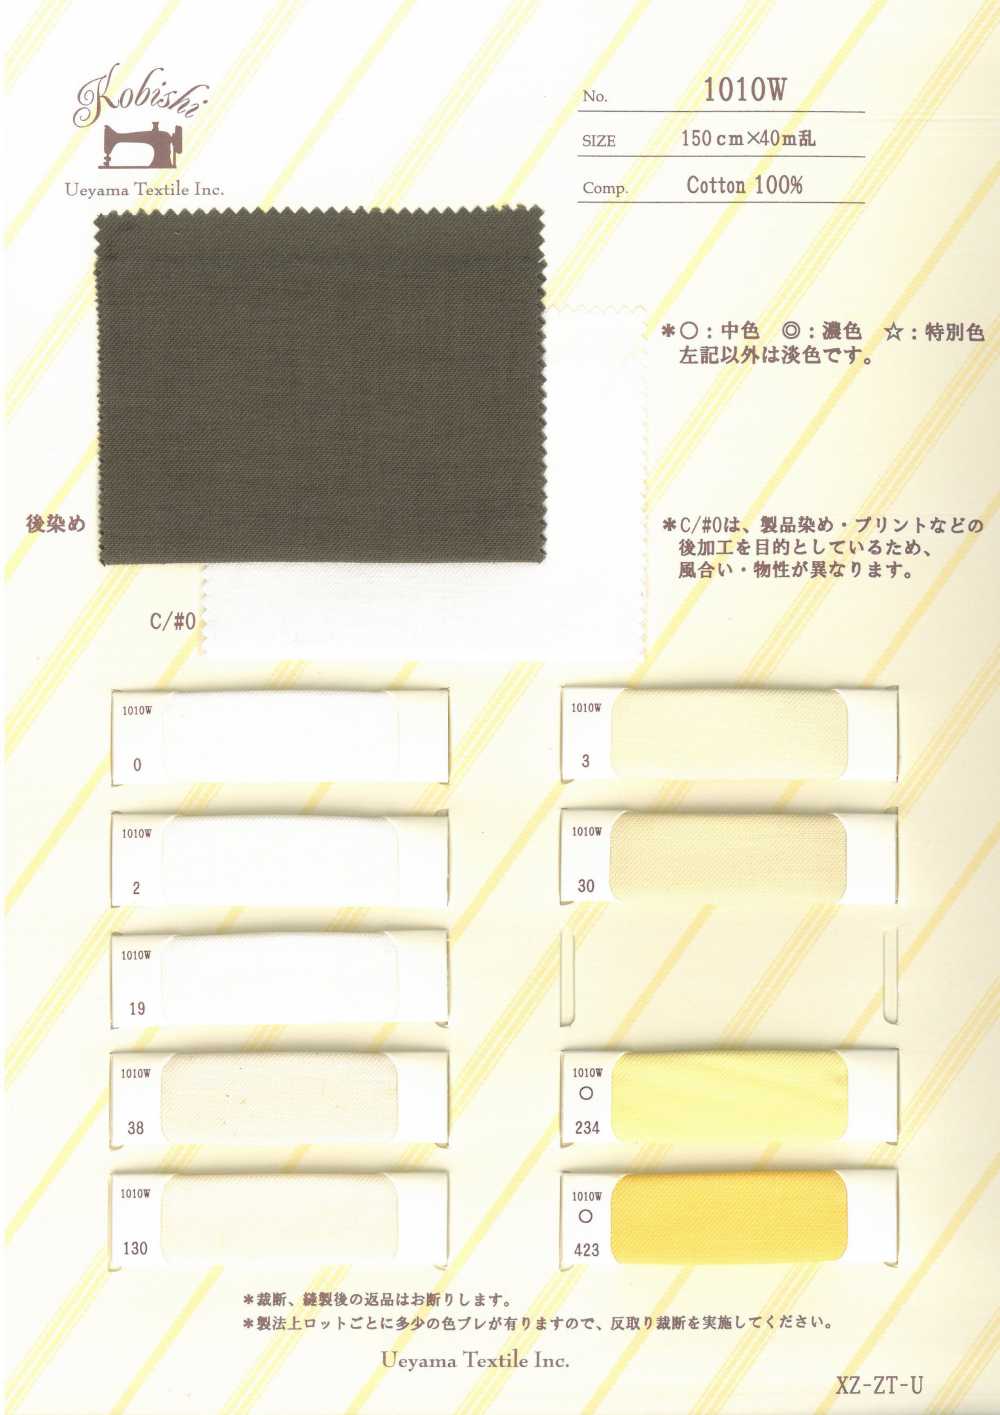 1010W Doublure De Poche Large N° 4 Ueyama Textile